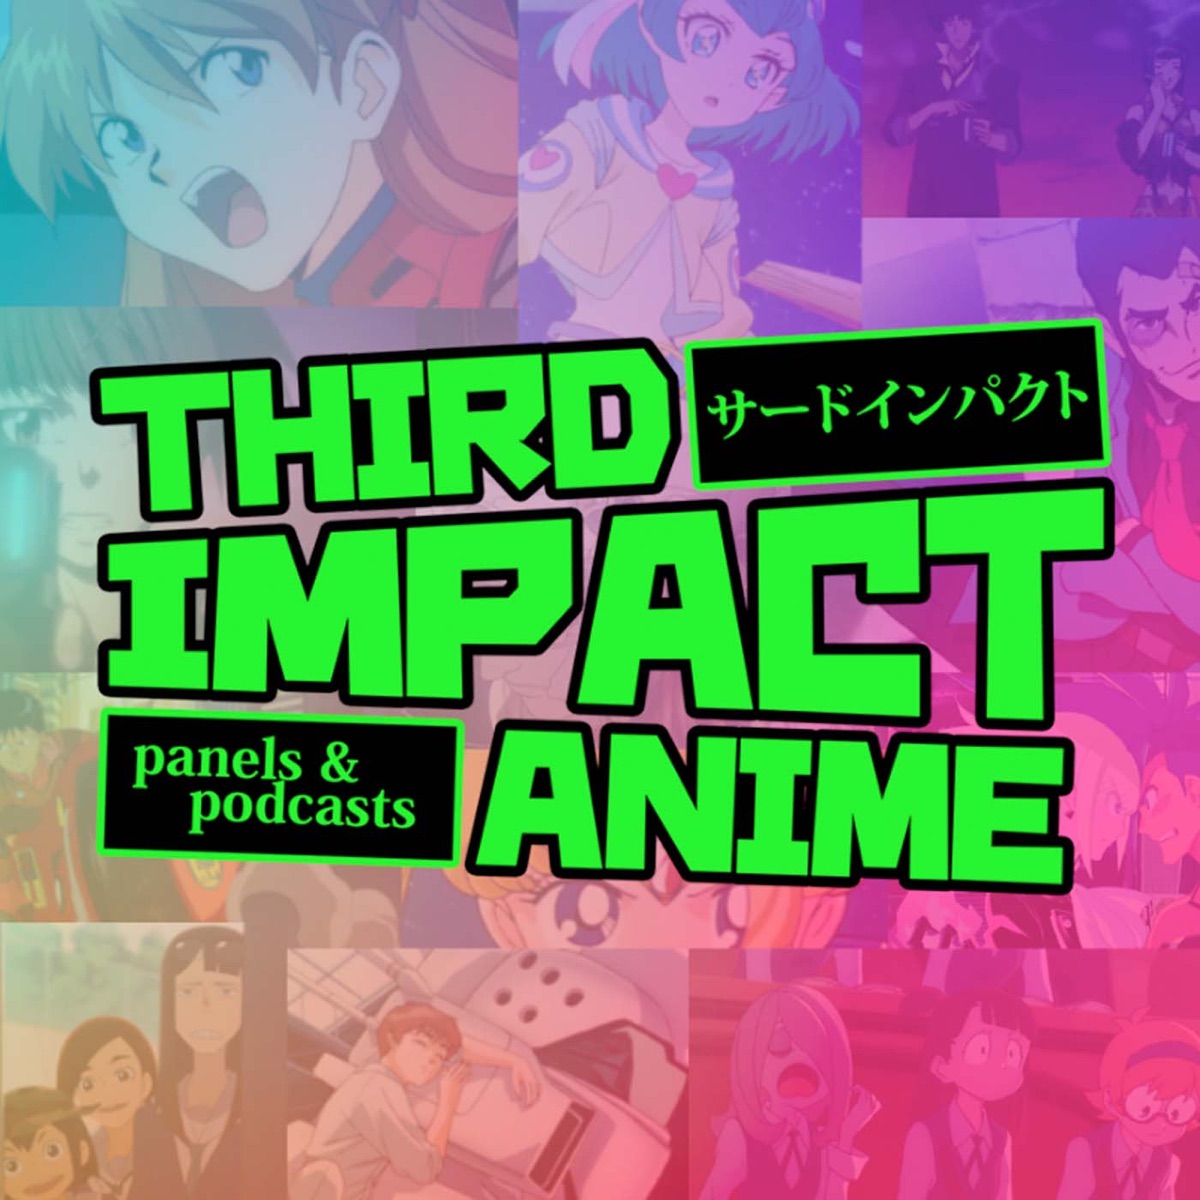 Top 10 Anime of the Week #02 - Fall 2023 (Anime Corner) : r/anime